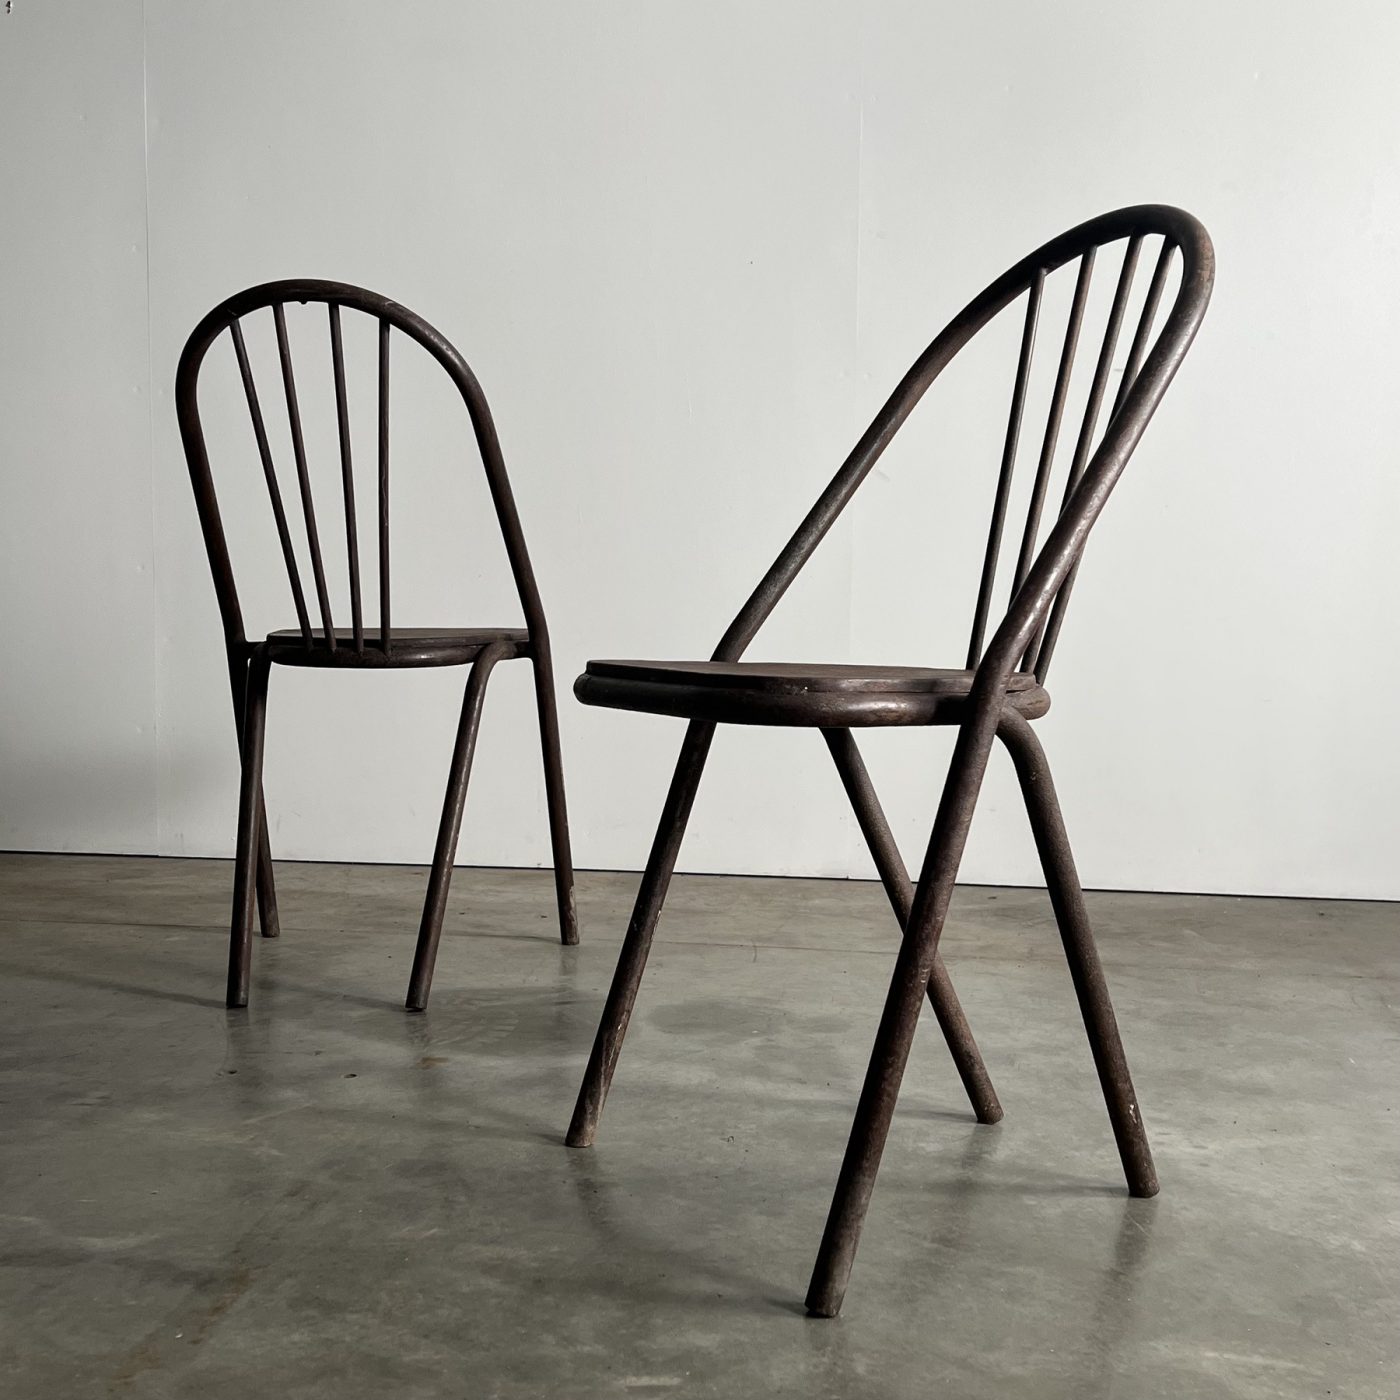 objet-vagabond-metal-chairs0006